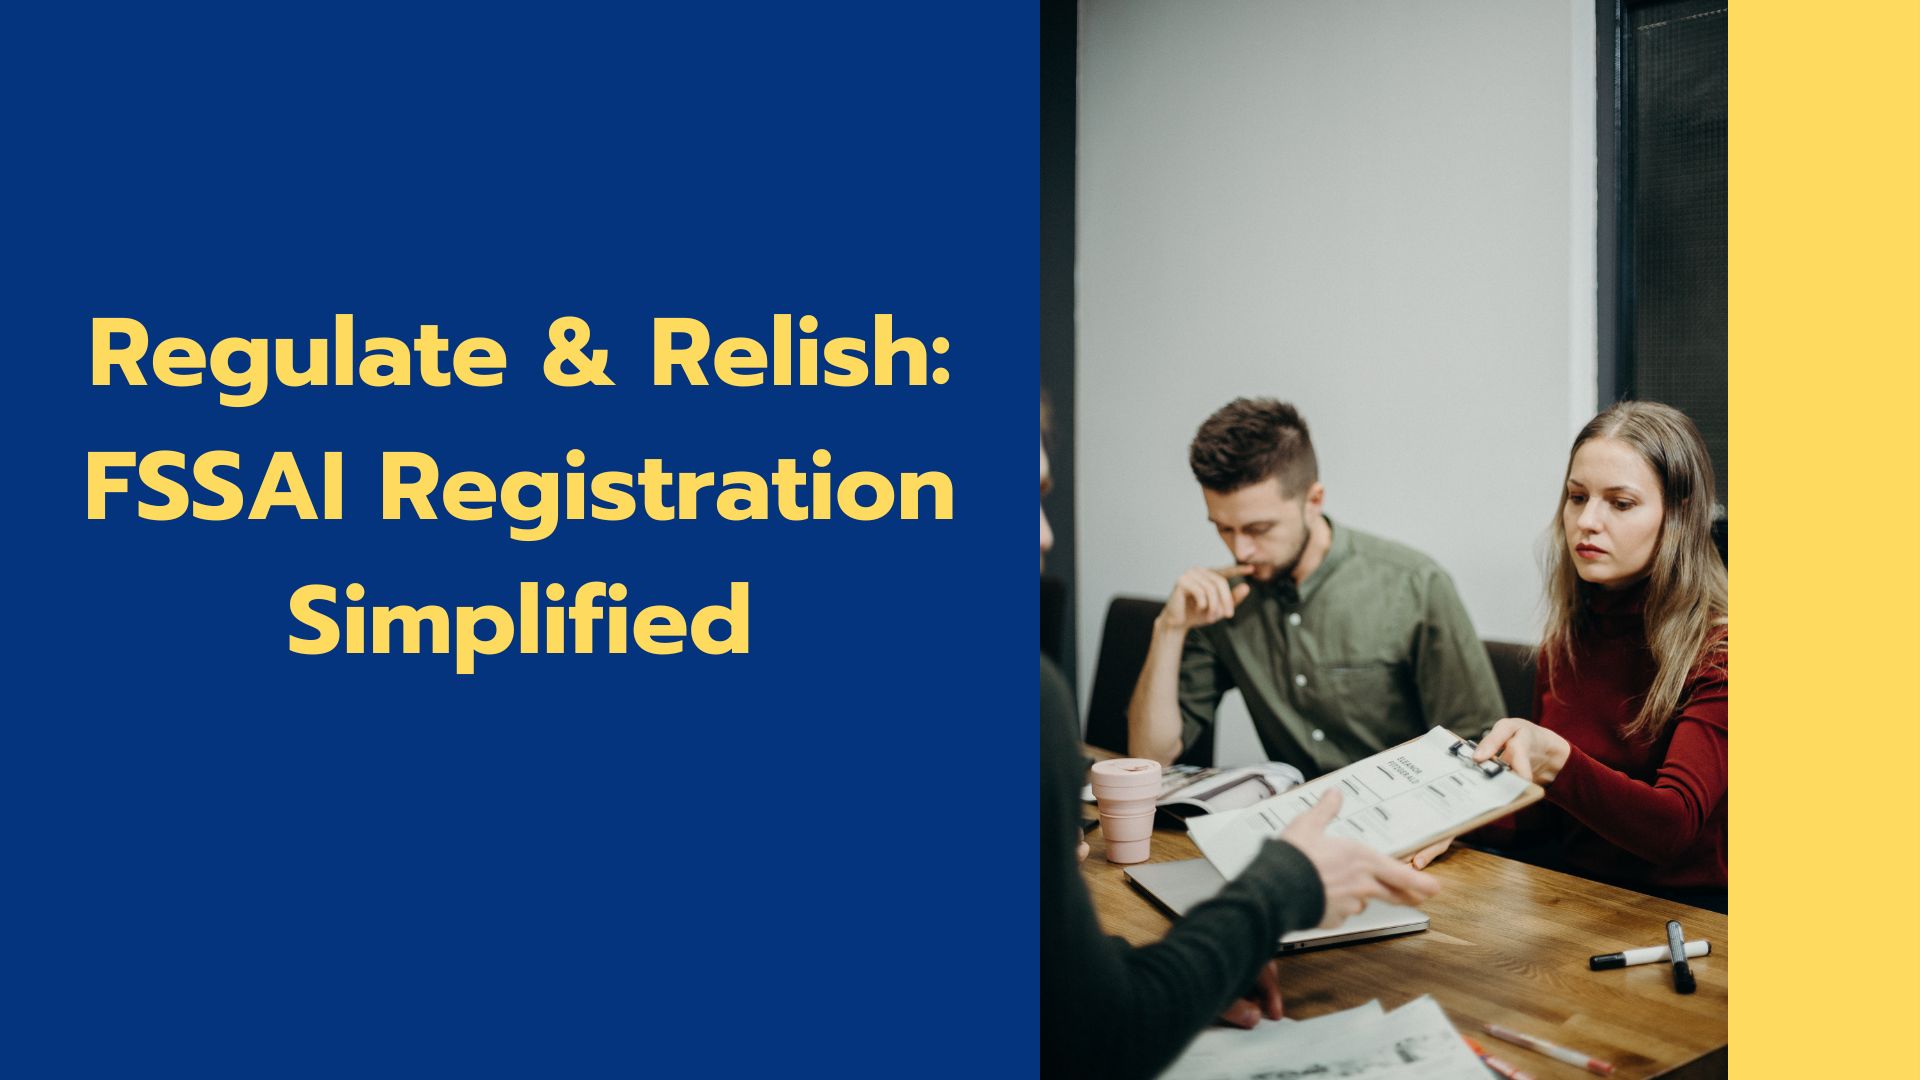 Regulate & Relish: FSSAI Registration Simplified